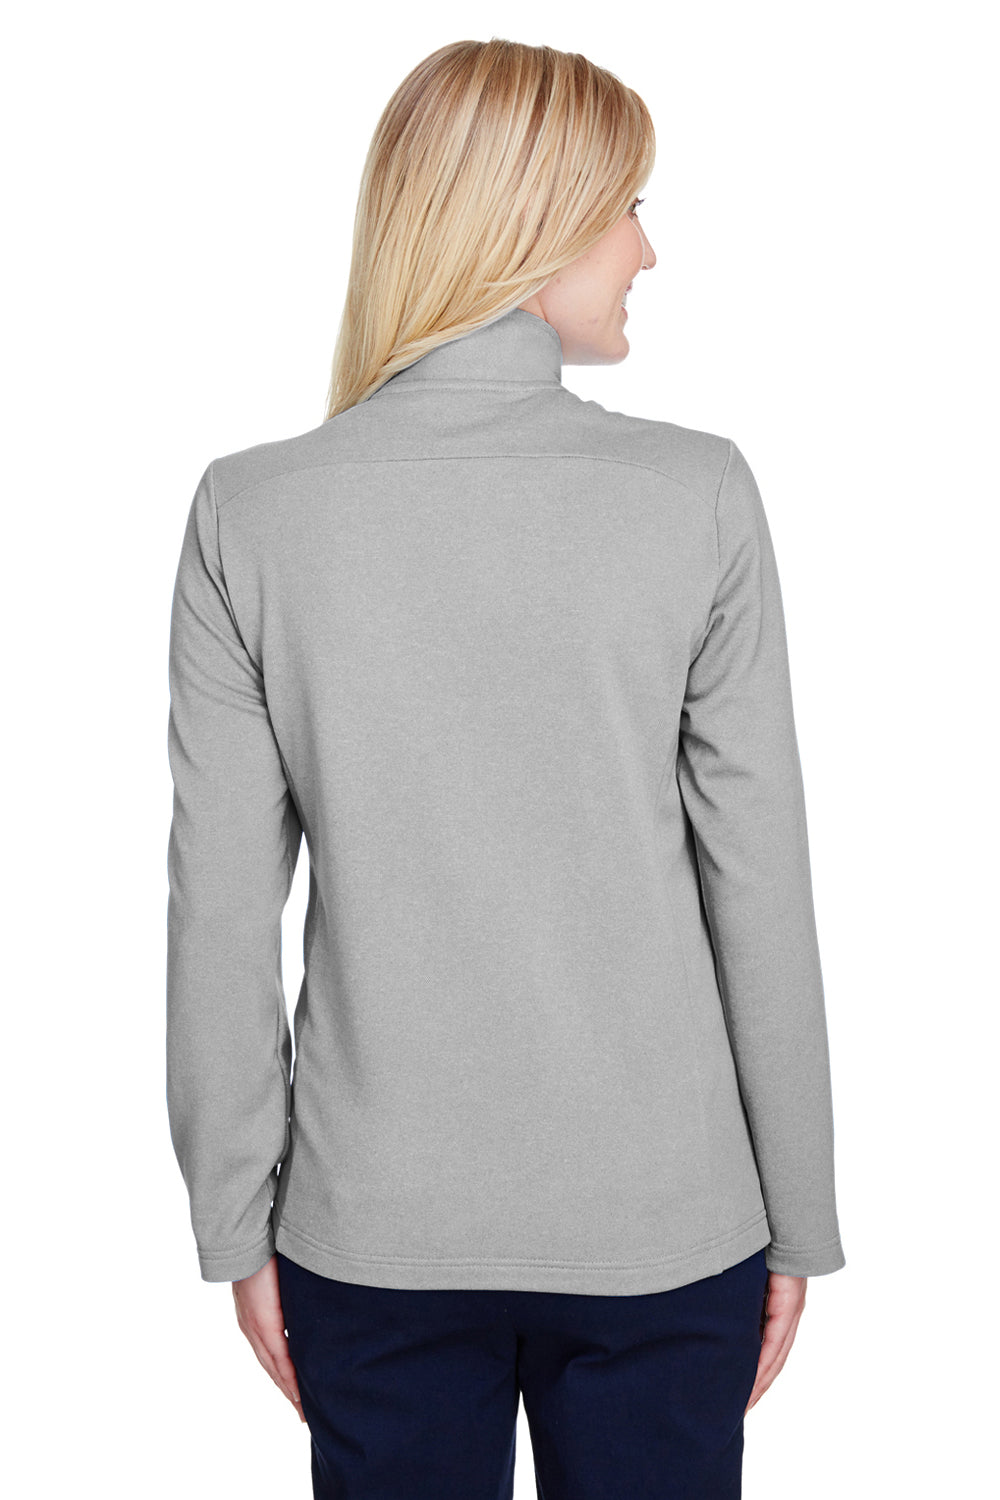 UltraClub UC792W Womens Coastal Performance Moisture Wicking Fleece 1/4 Zip Sweatshirt Silver Grey Back